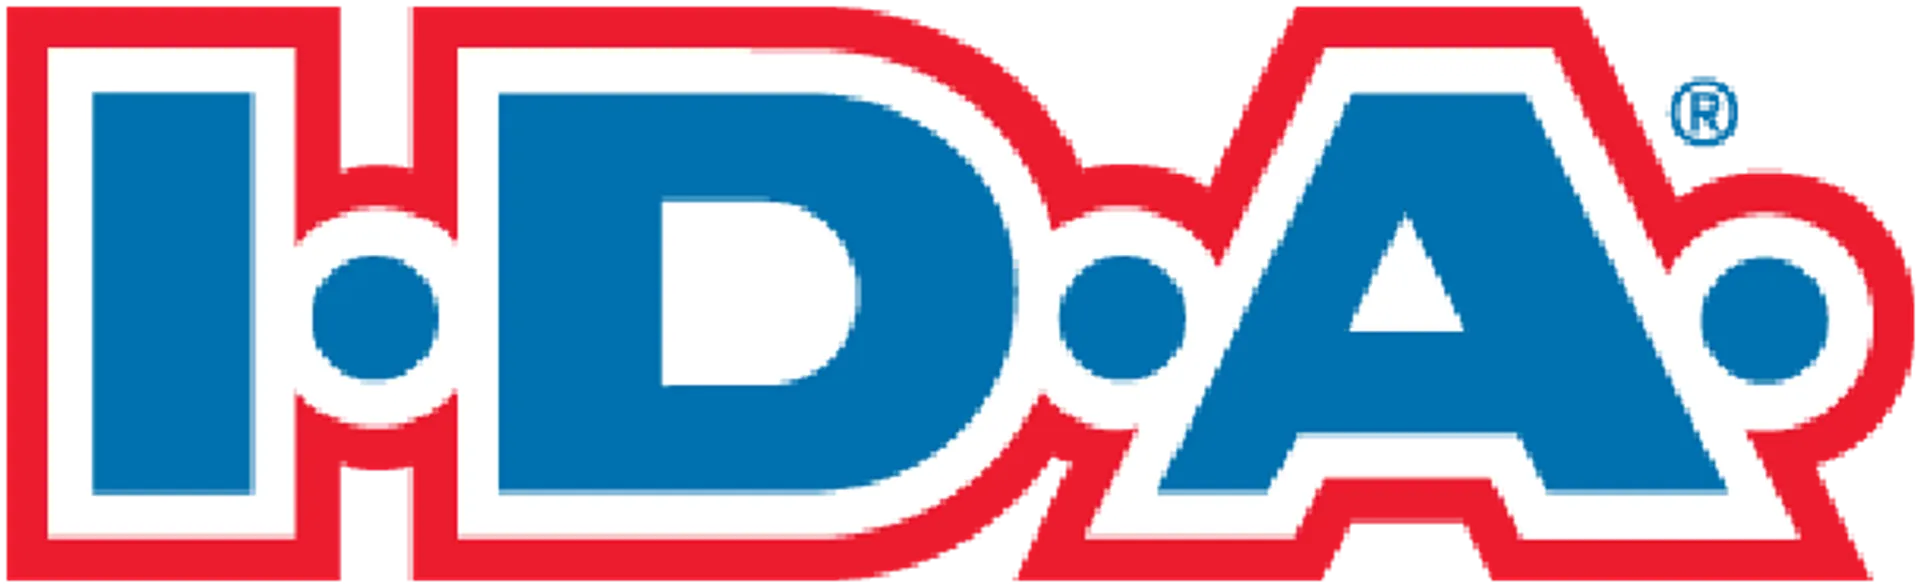 IDA PHARMACY logo of current flyer